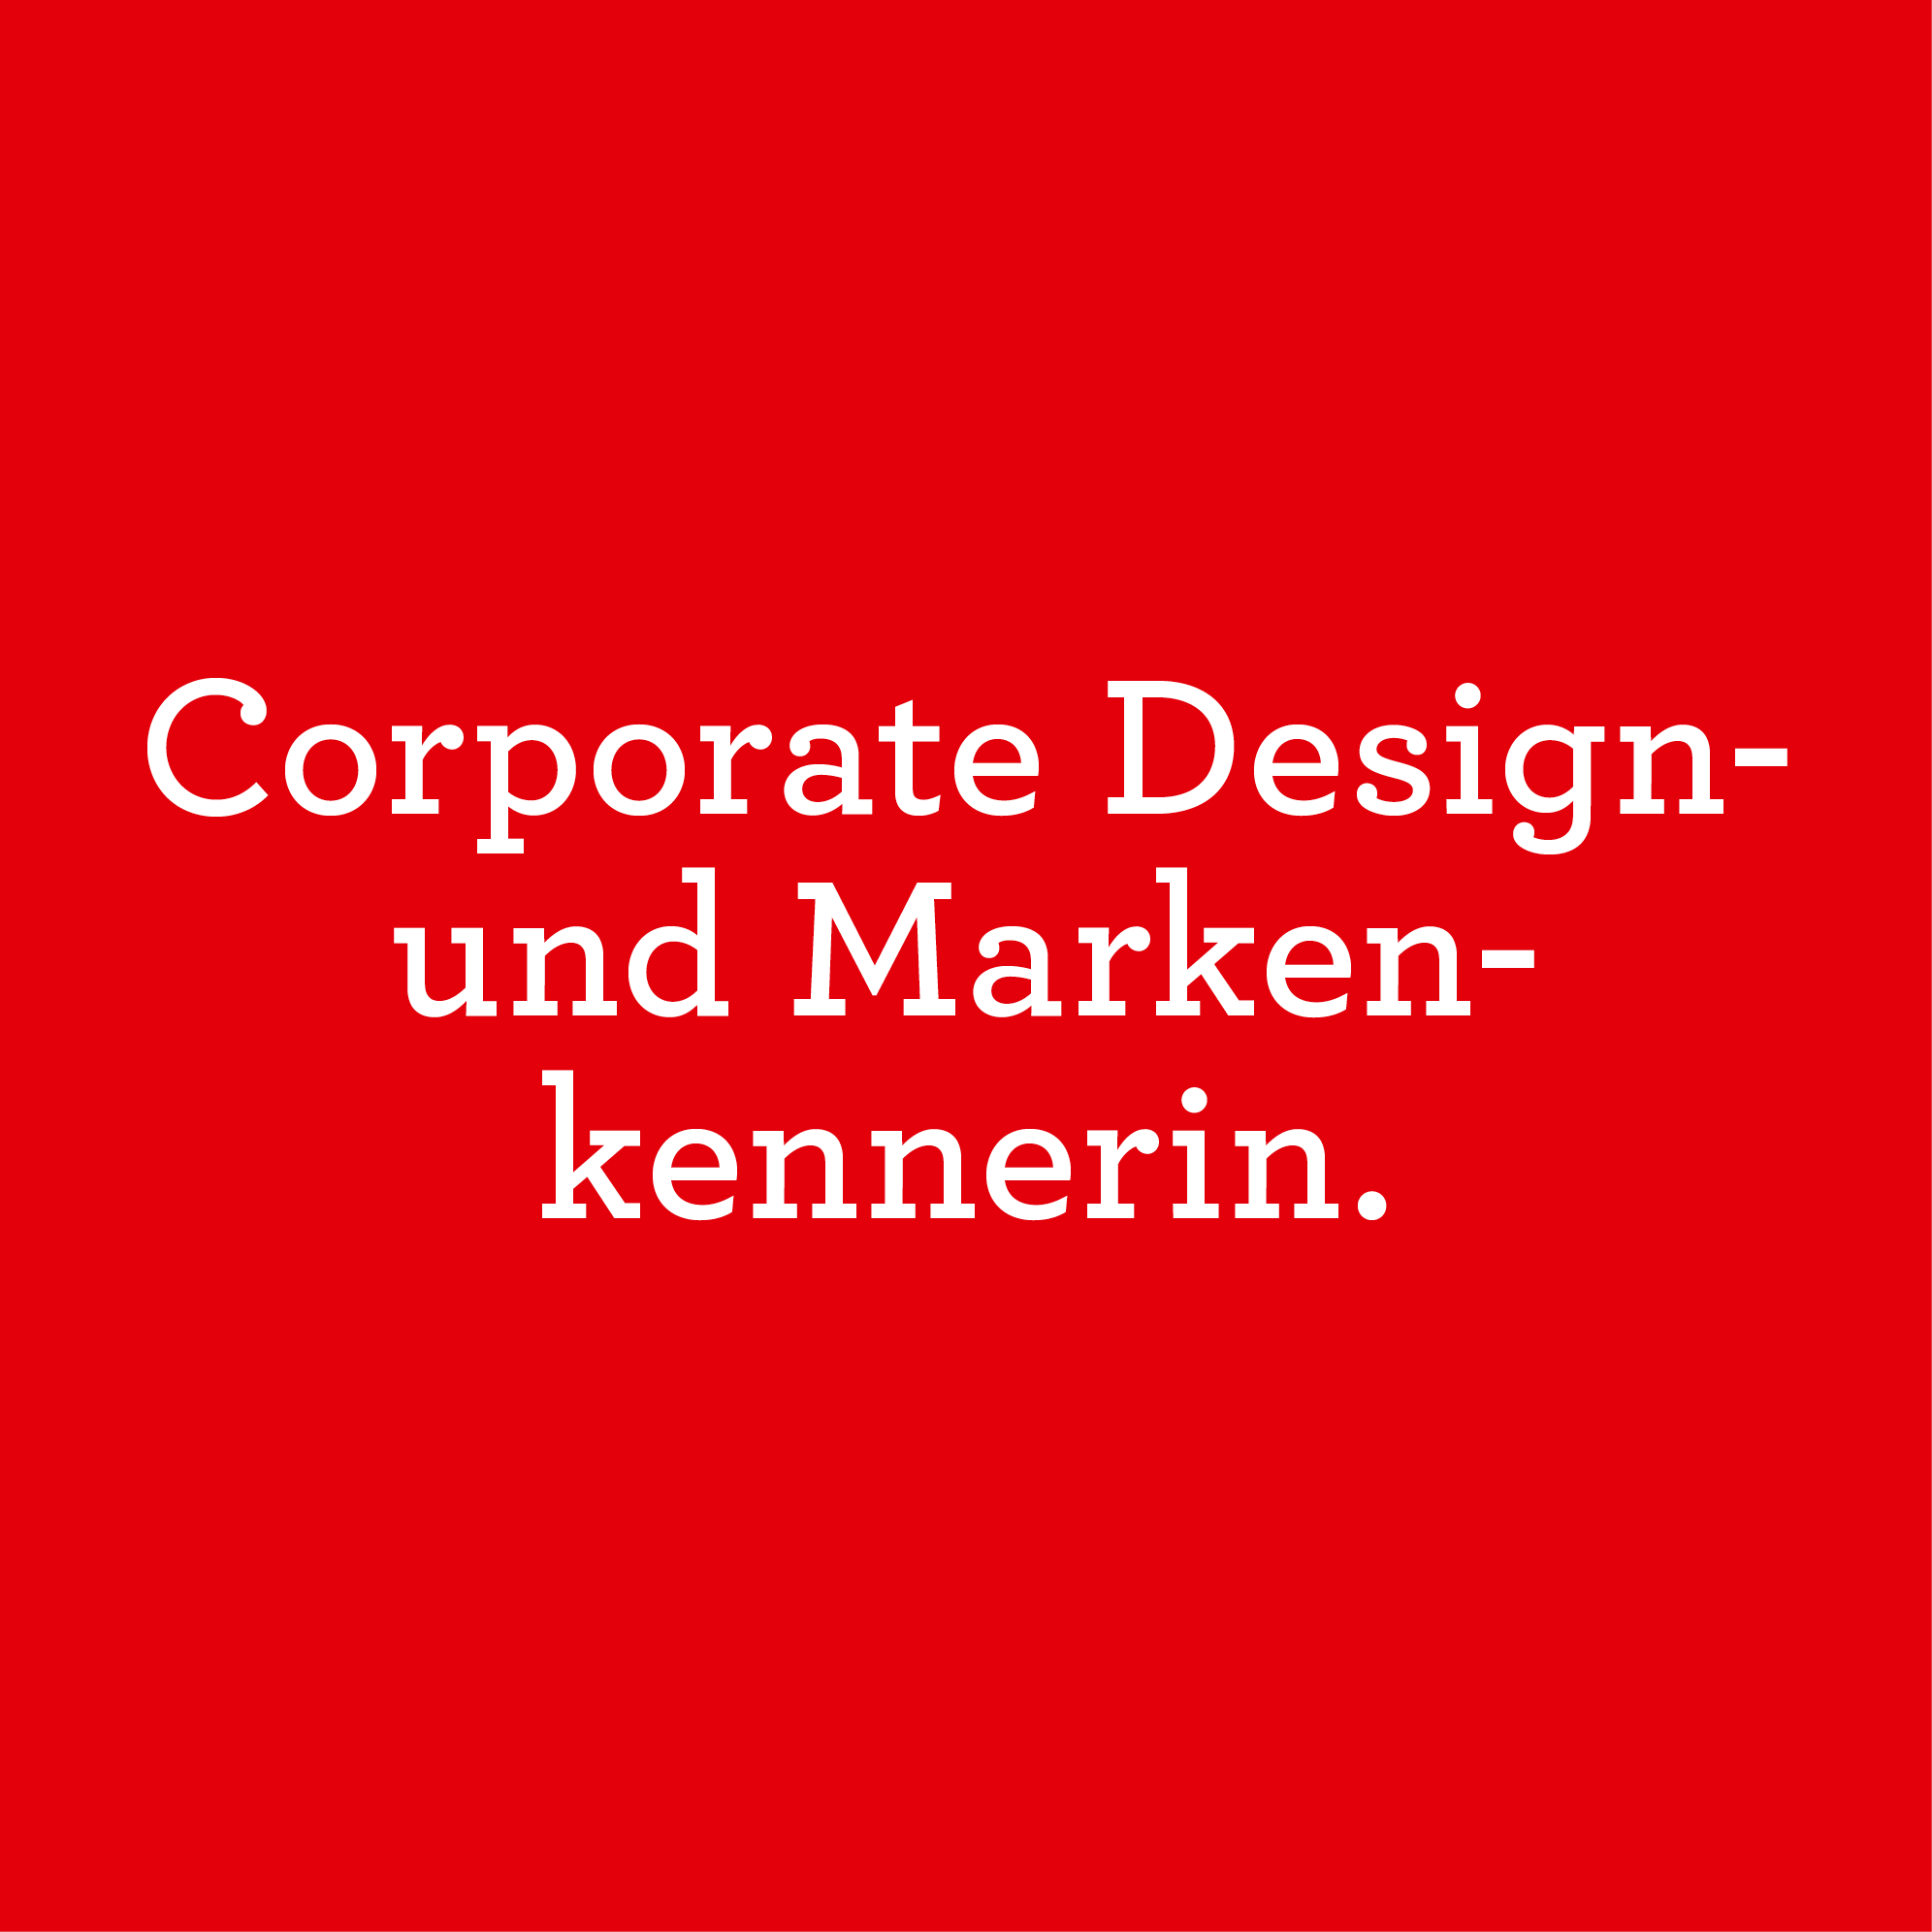 corporatedesign.png